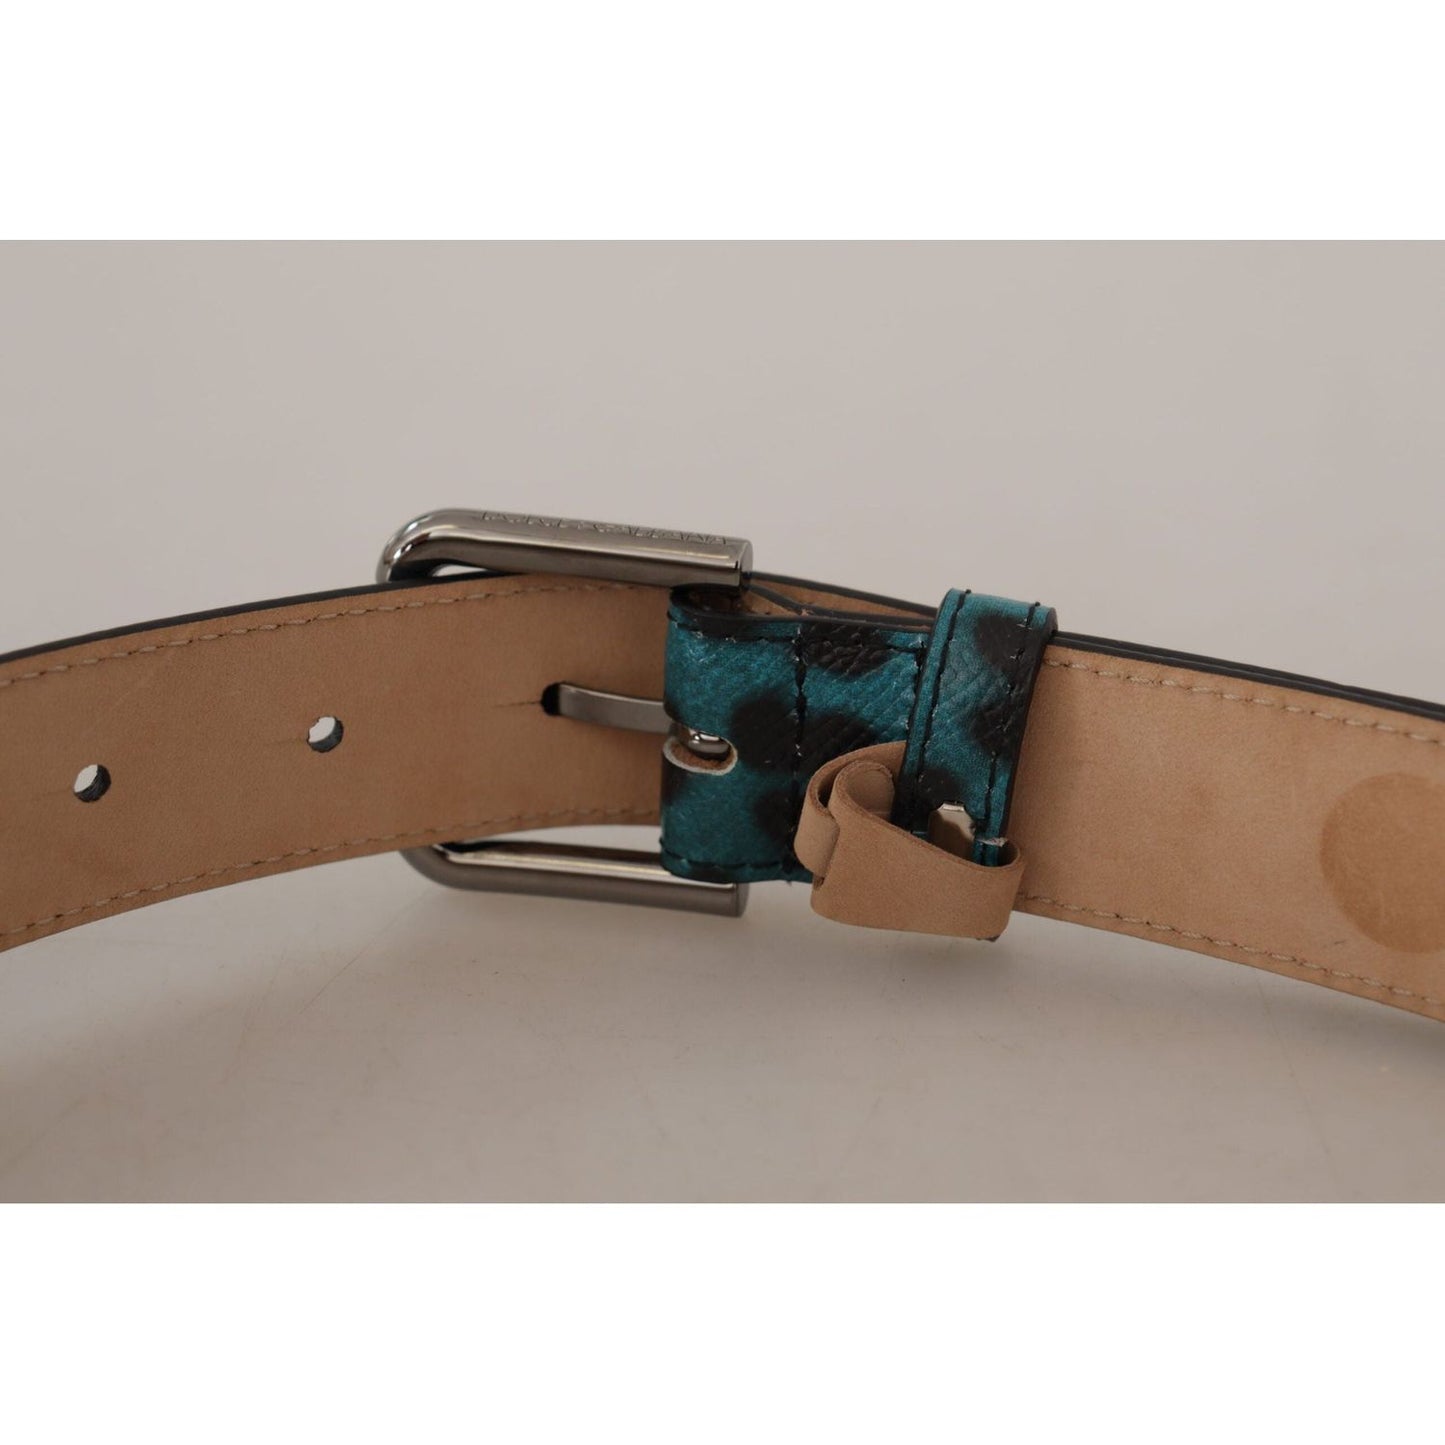 Dolce & Gabbana Engraved Logo Leather Belt in Blue Green blue-green-leopard-print-logo-metal-waist-buckle-belt